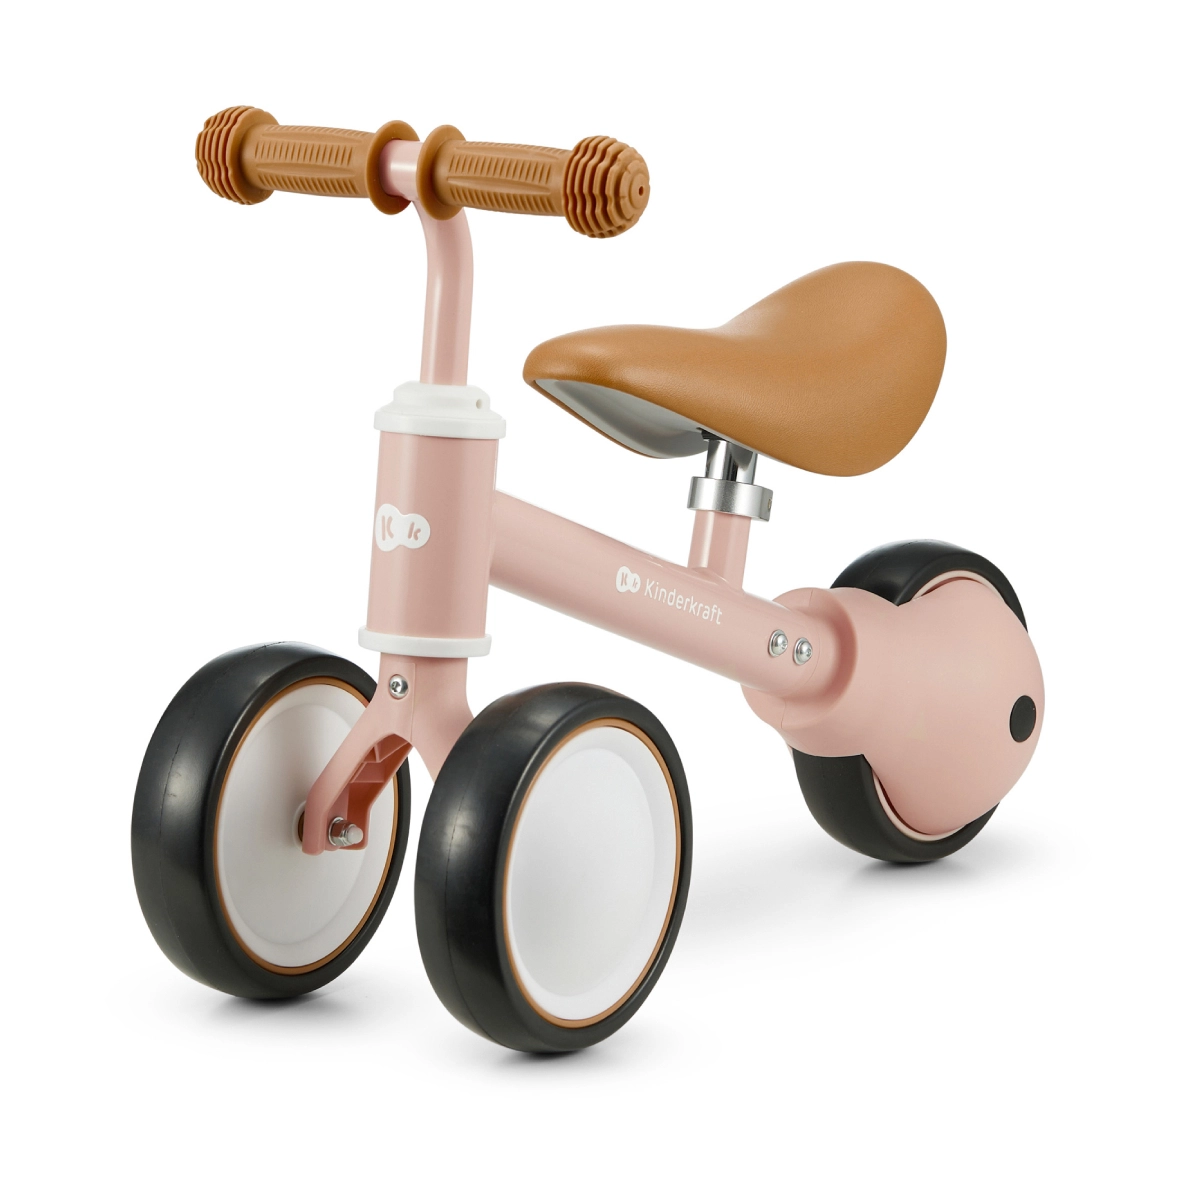 Kinderkraft Cutie Balance Bike